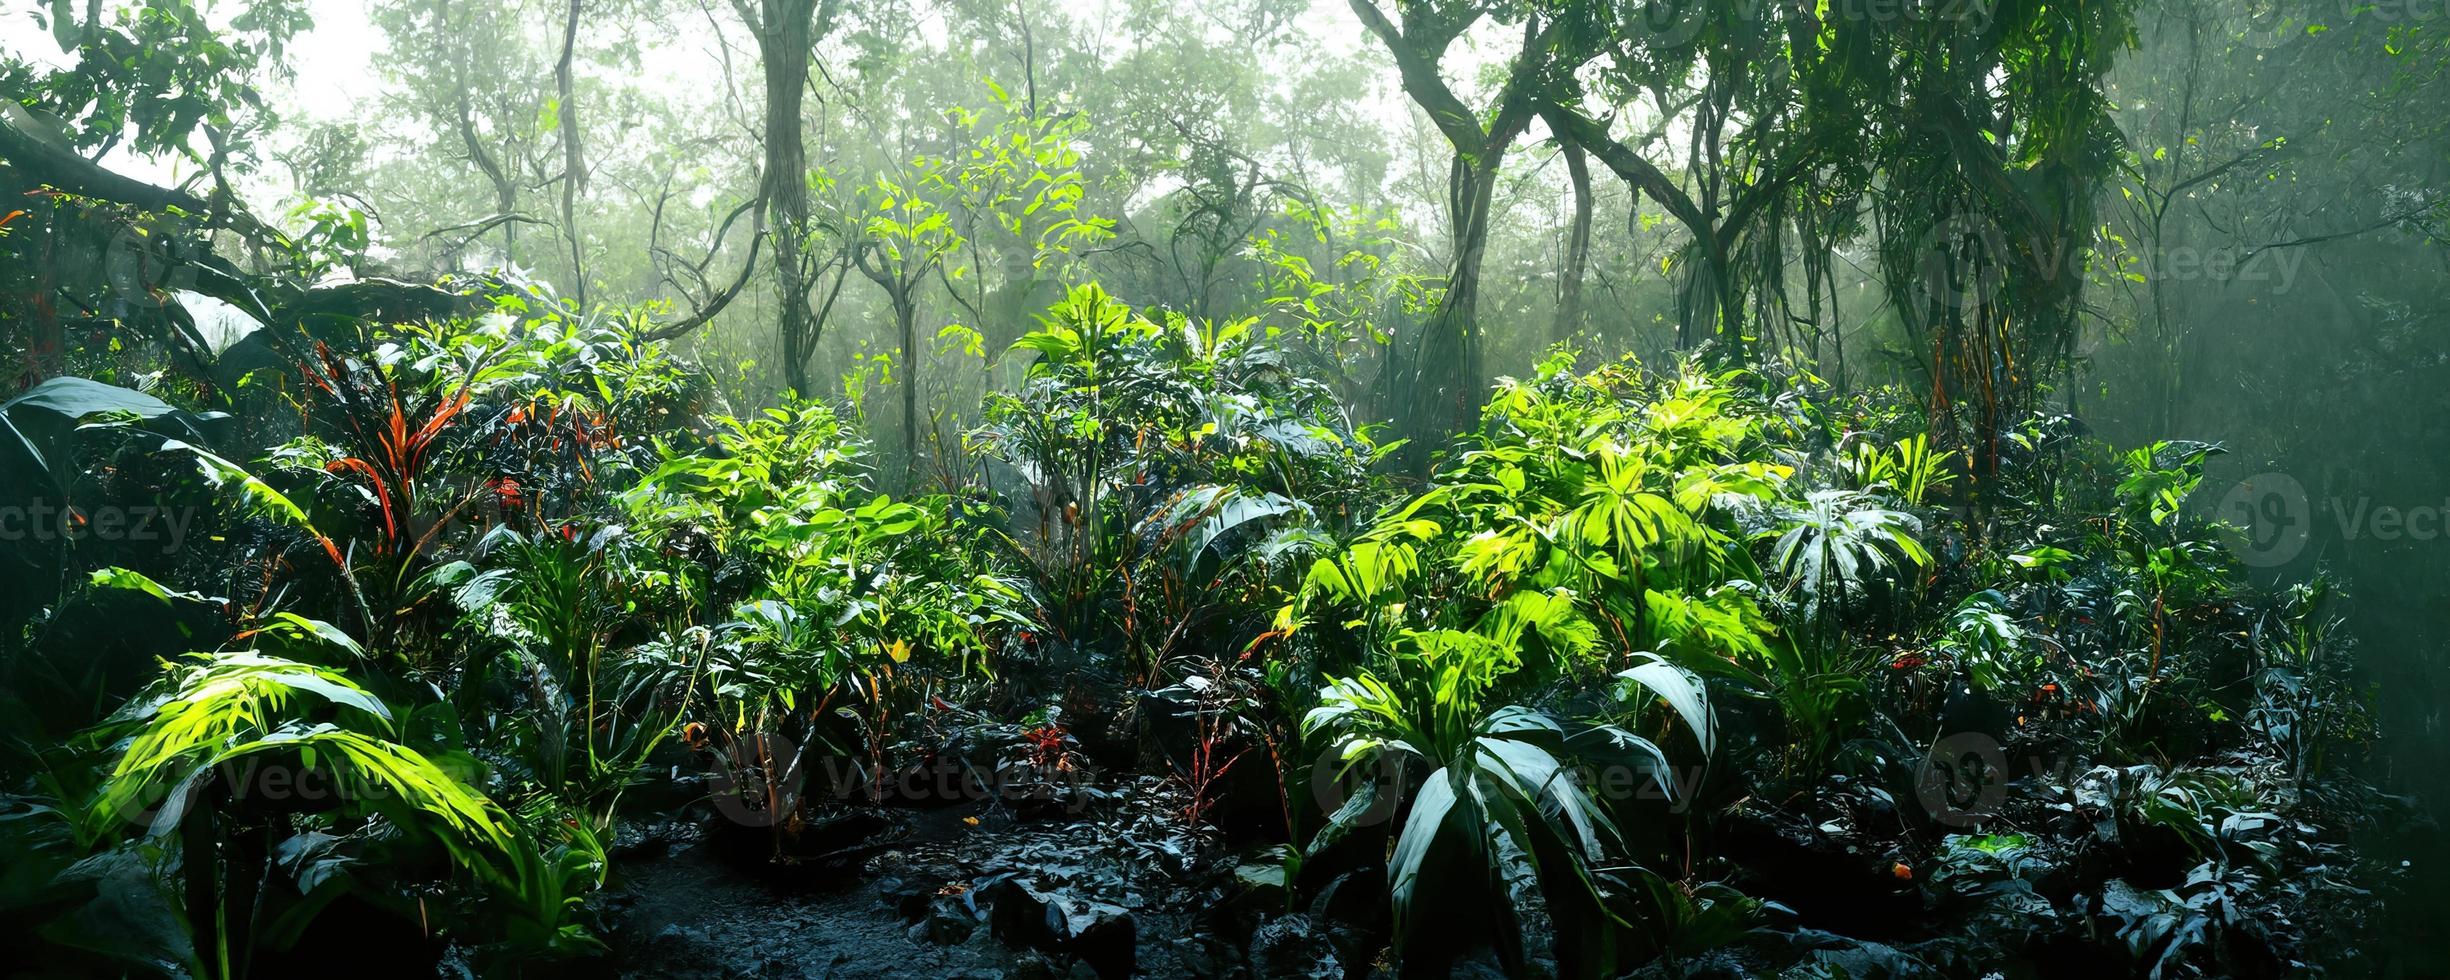 Foggy dark excotic tropical jungle illustration design photo